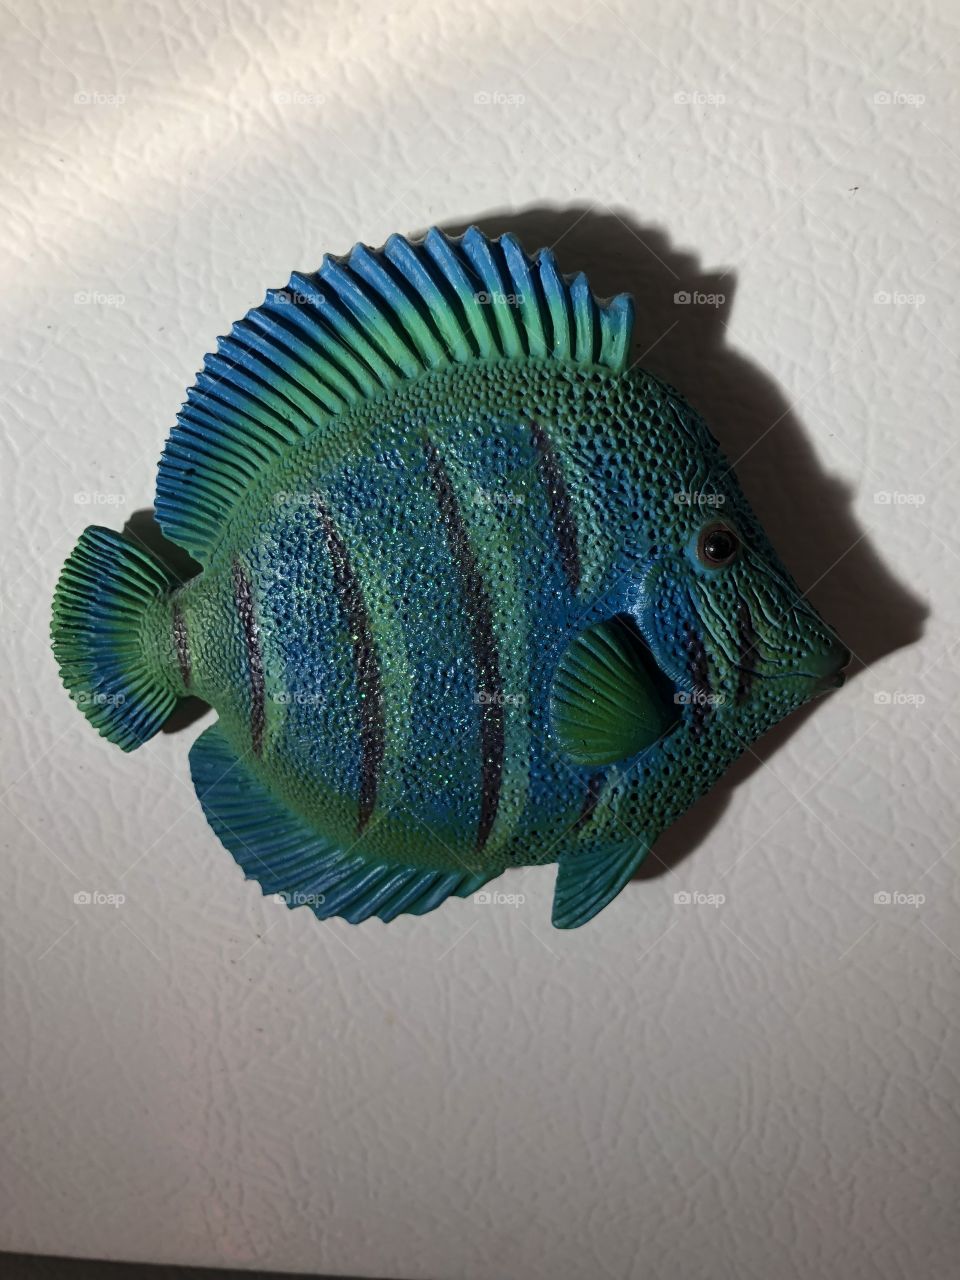 A beautiful fish magnet